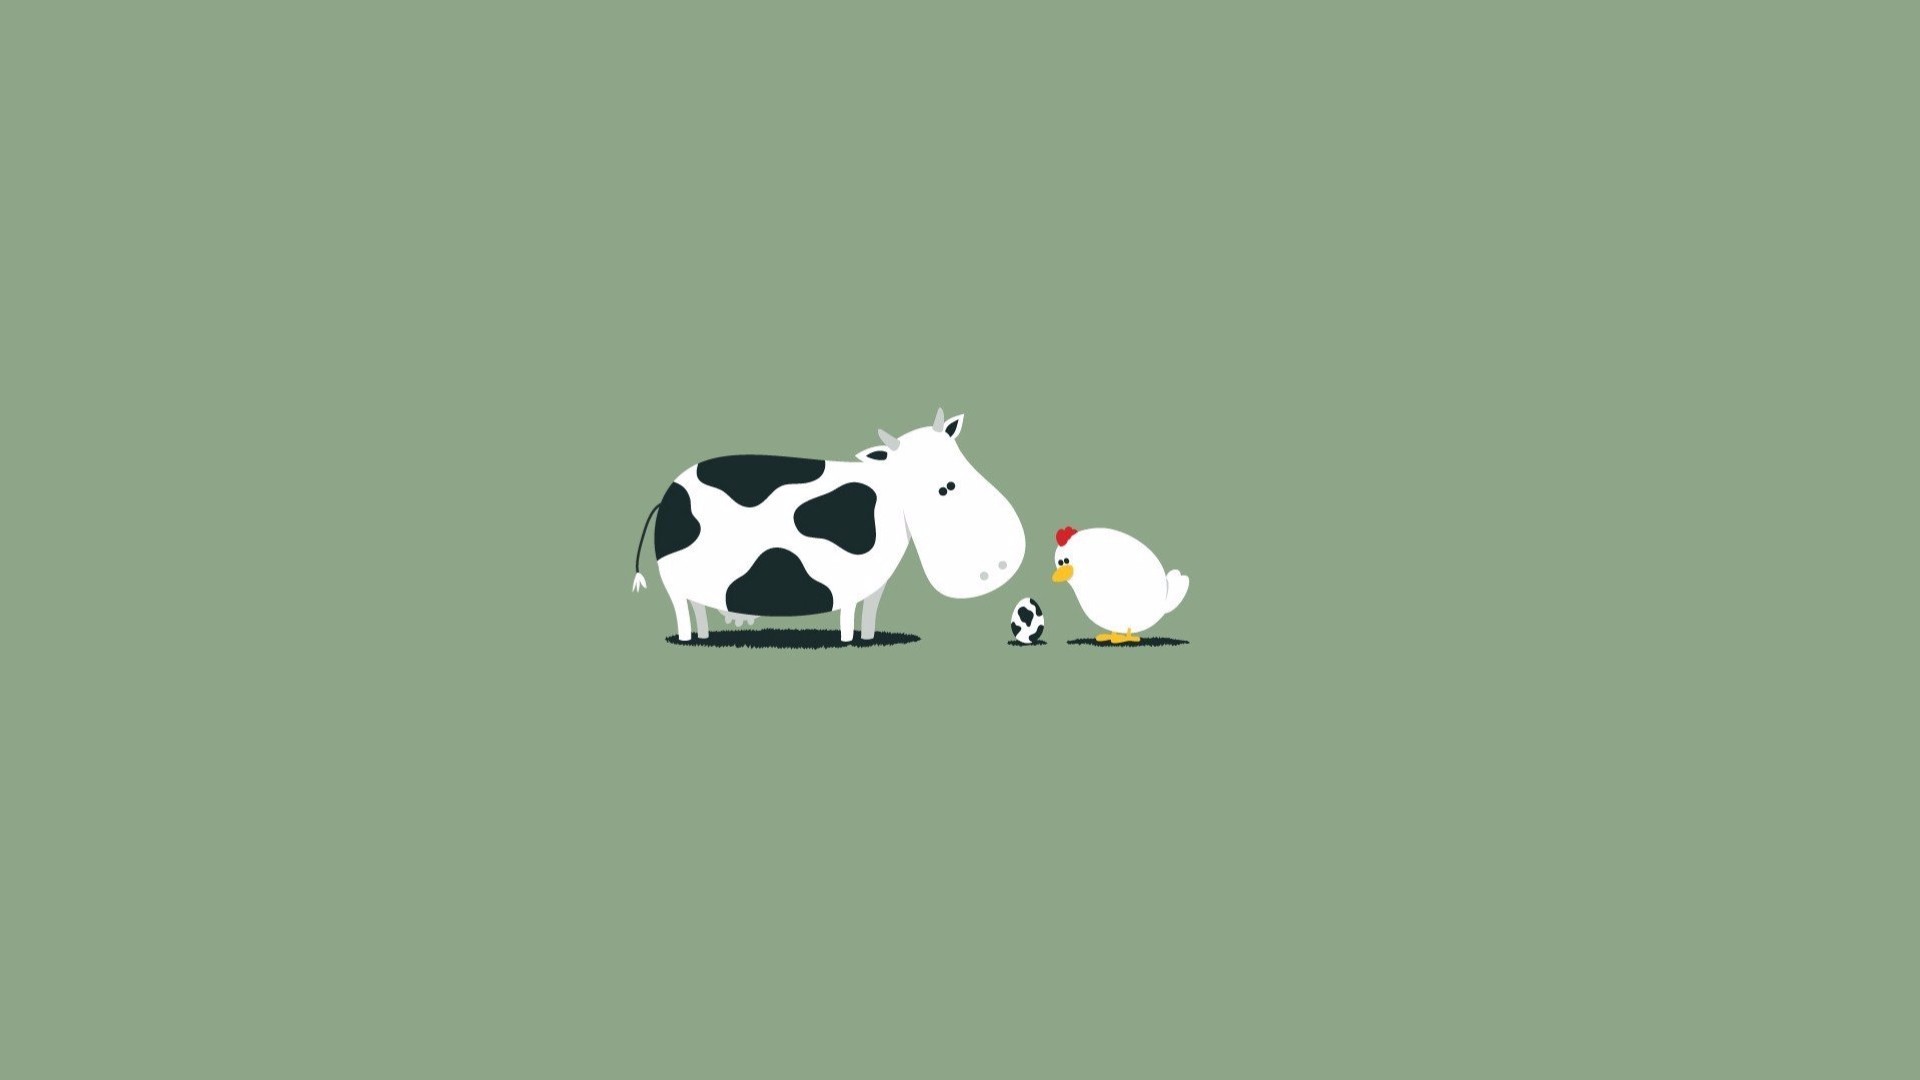 Wallpaper Minimalism cow and chicken